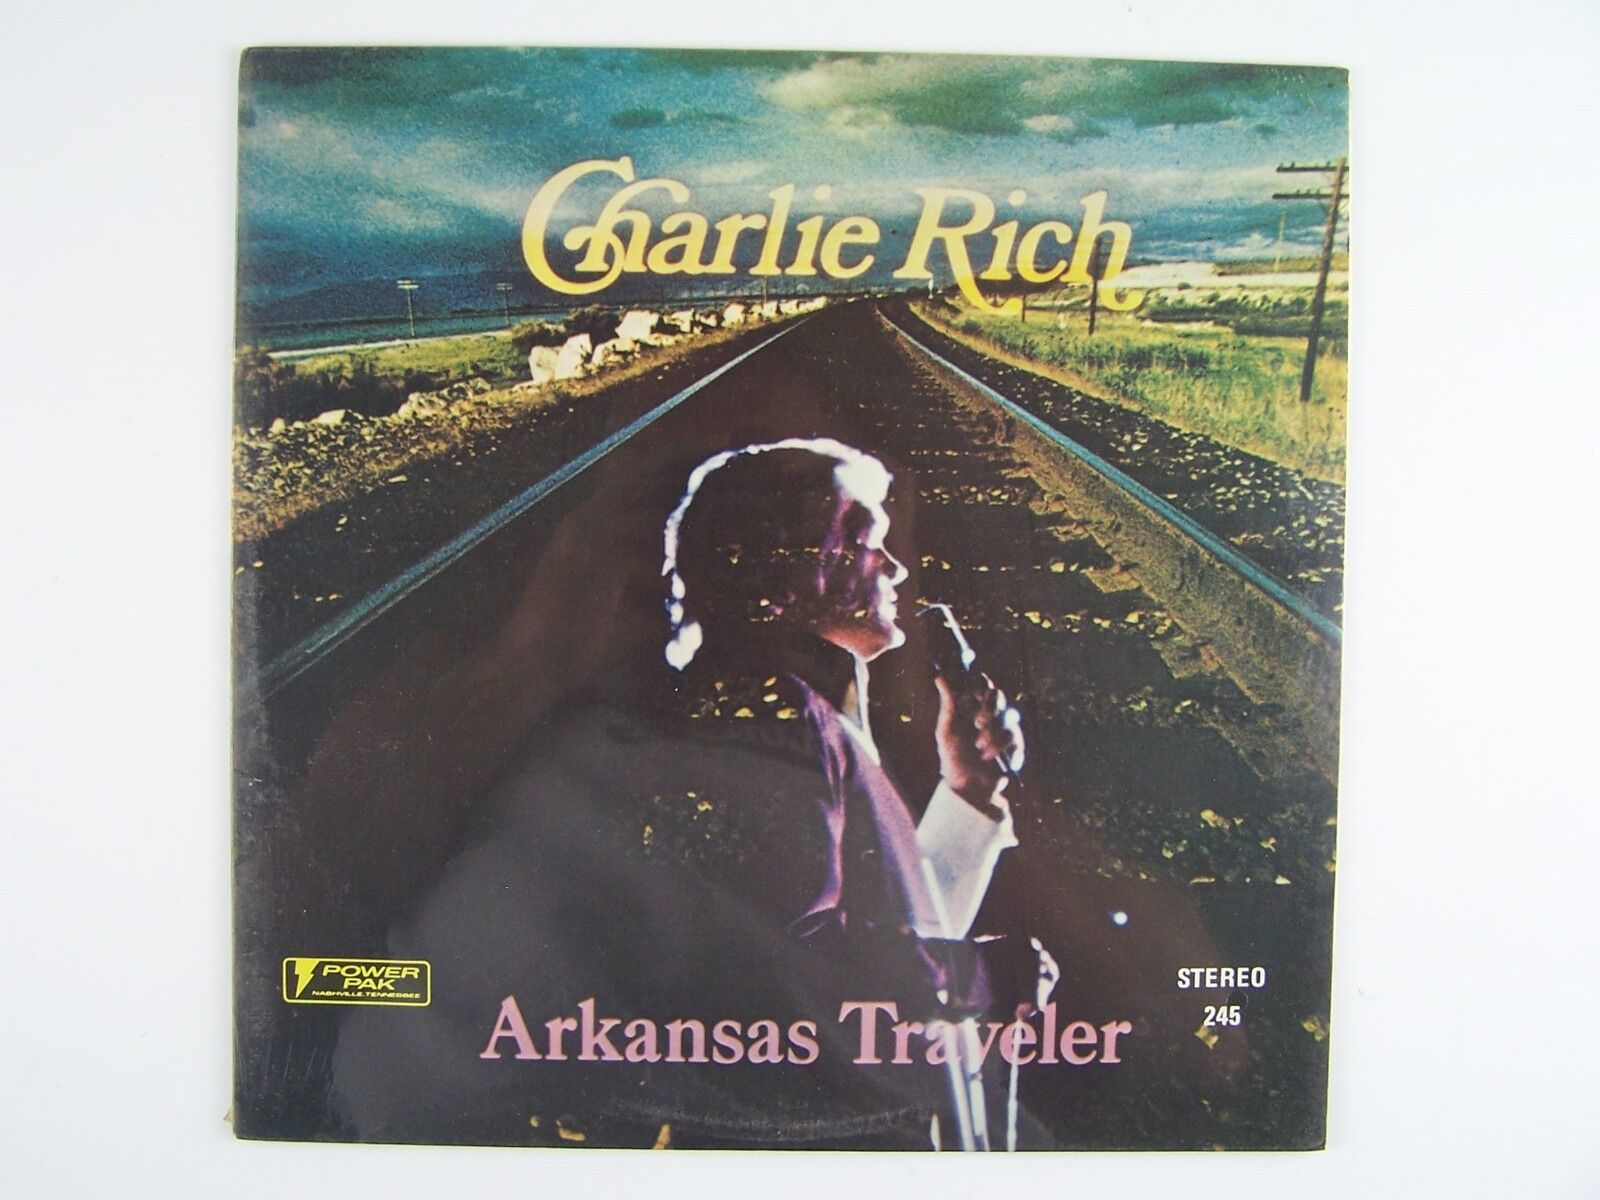 Charlie Rich - Arkansas Traveler Vinyl LP Record Album New Sealed